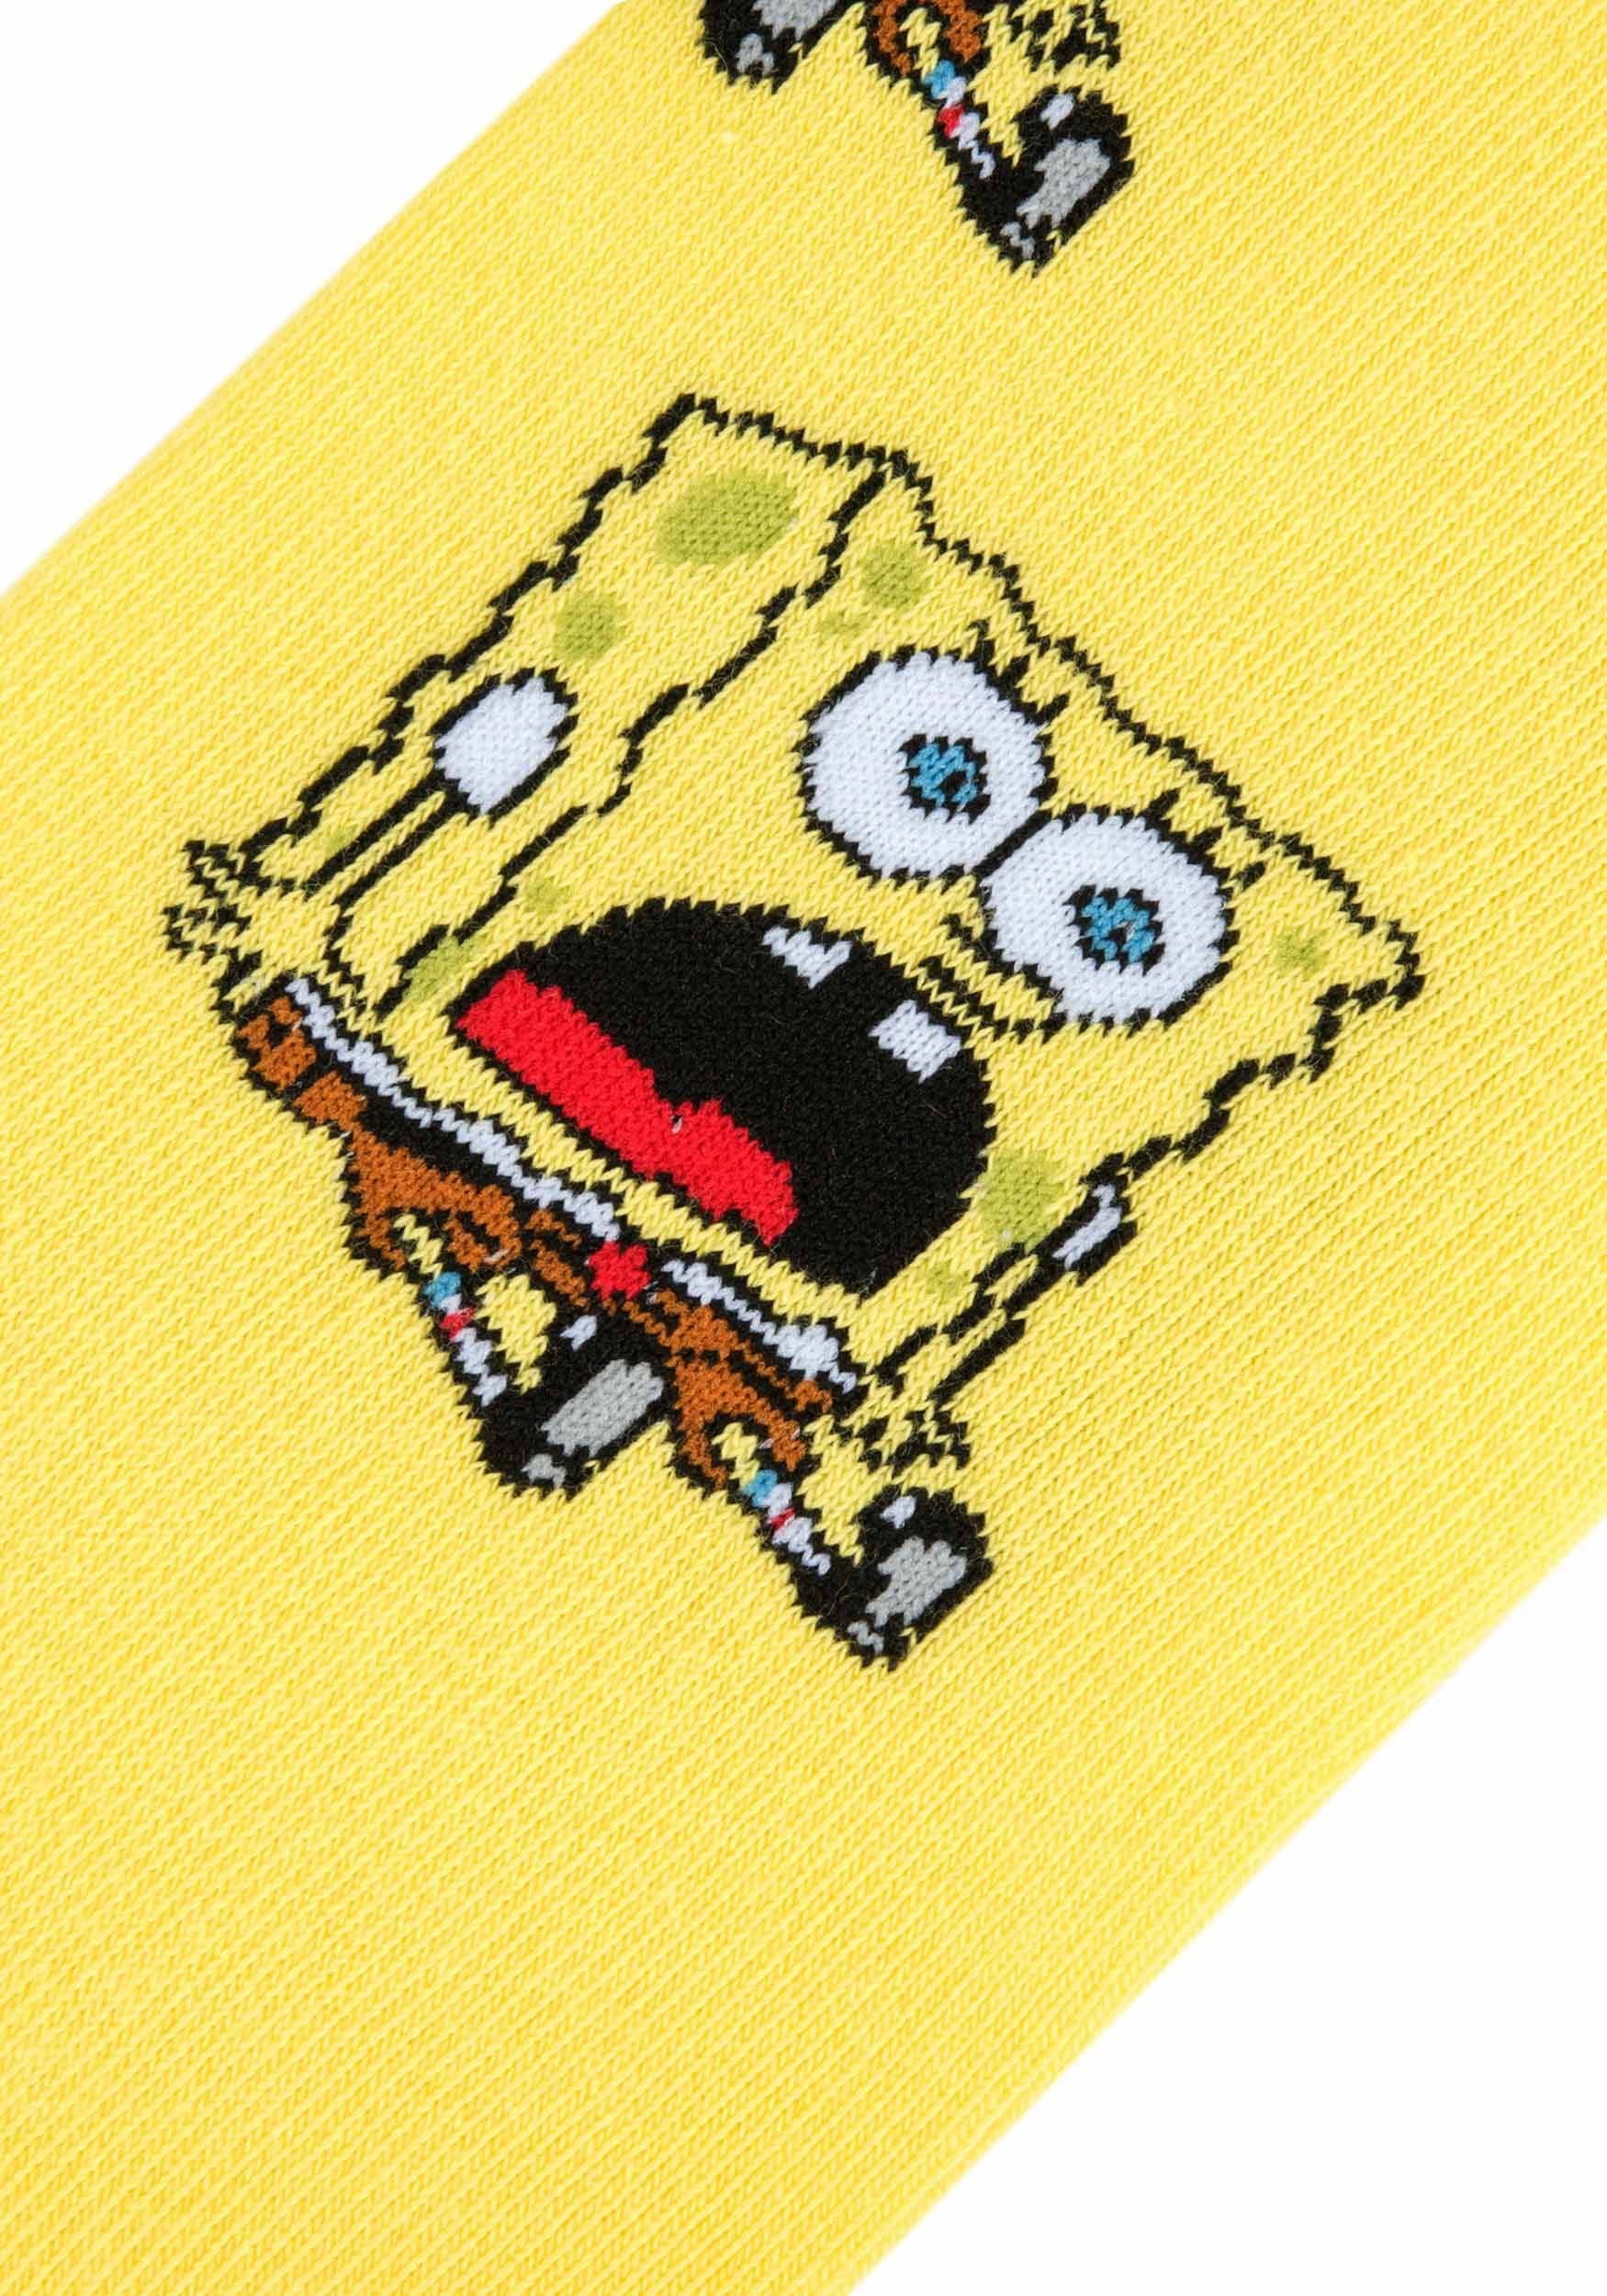 surprised spongebob